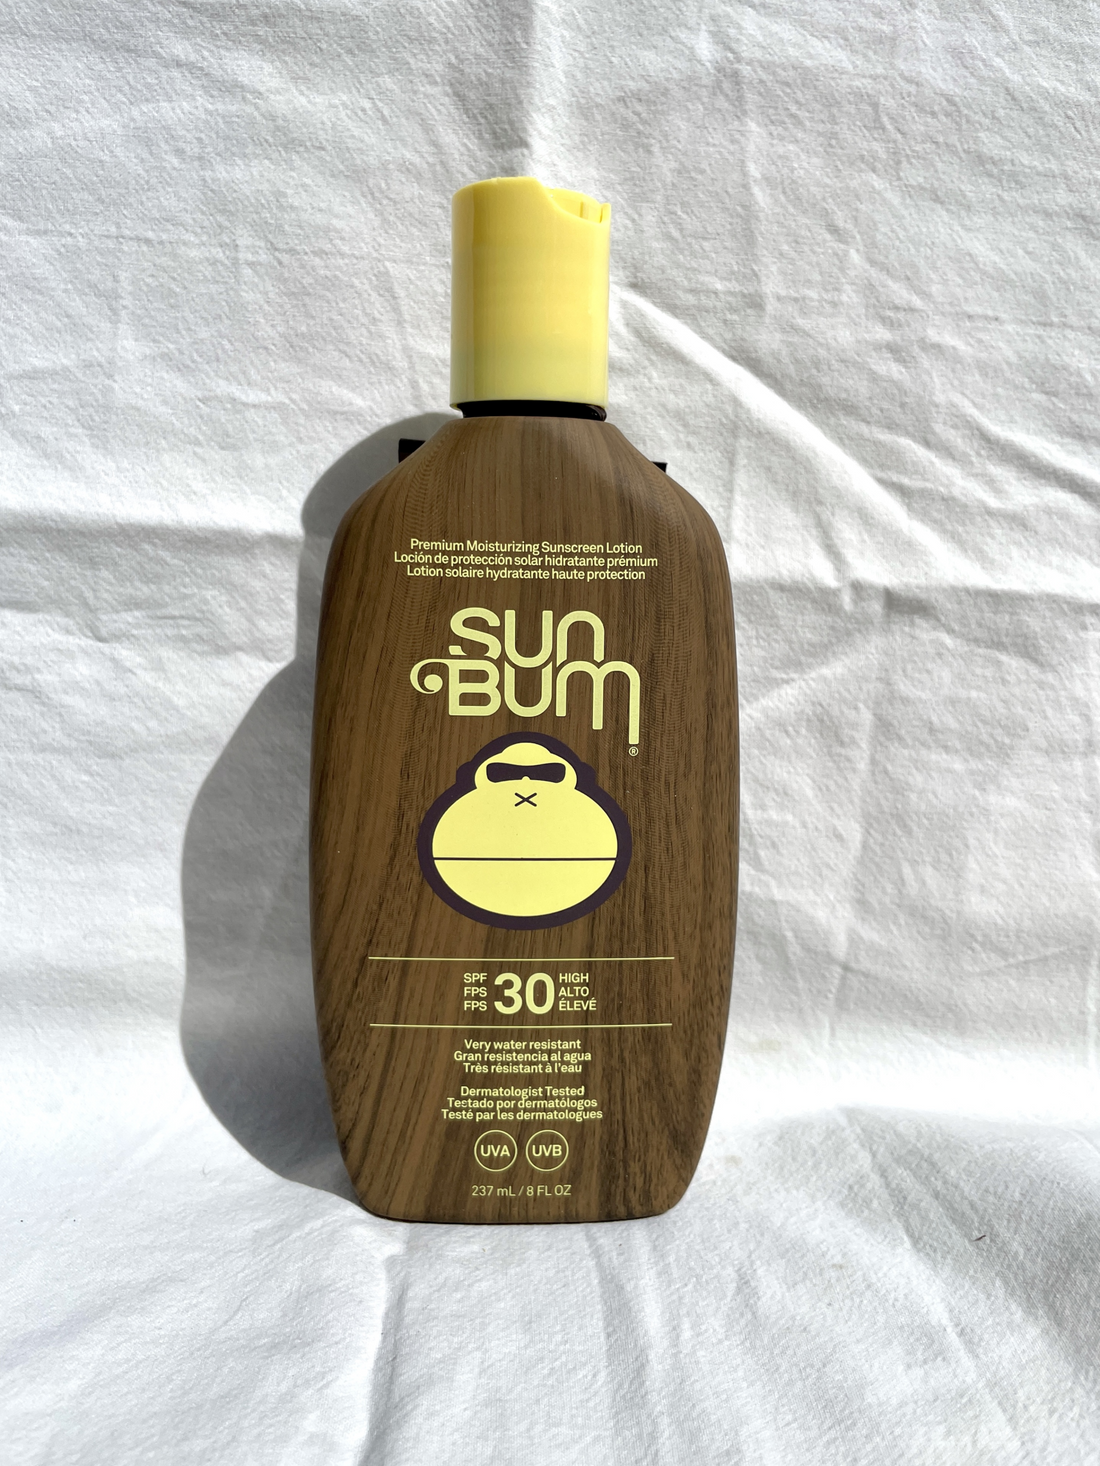 Premium Moisturizing Sunscreen Lotion, SPF30